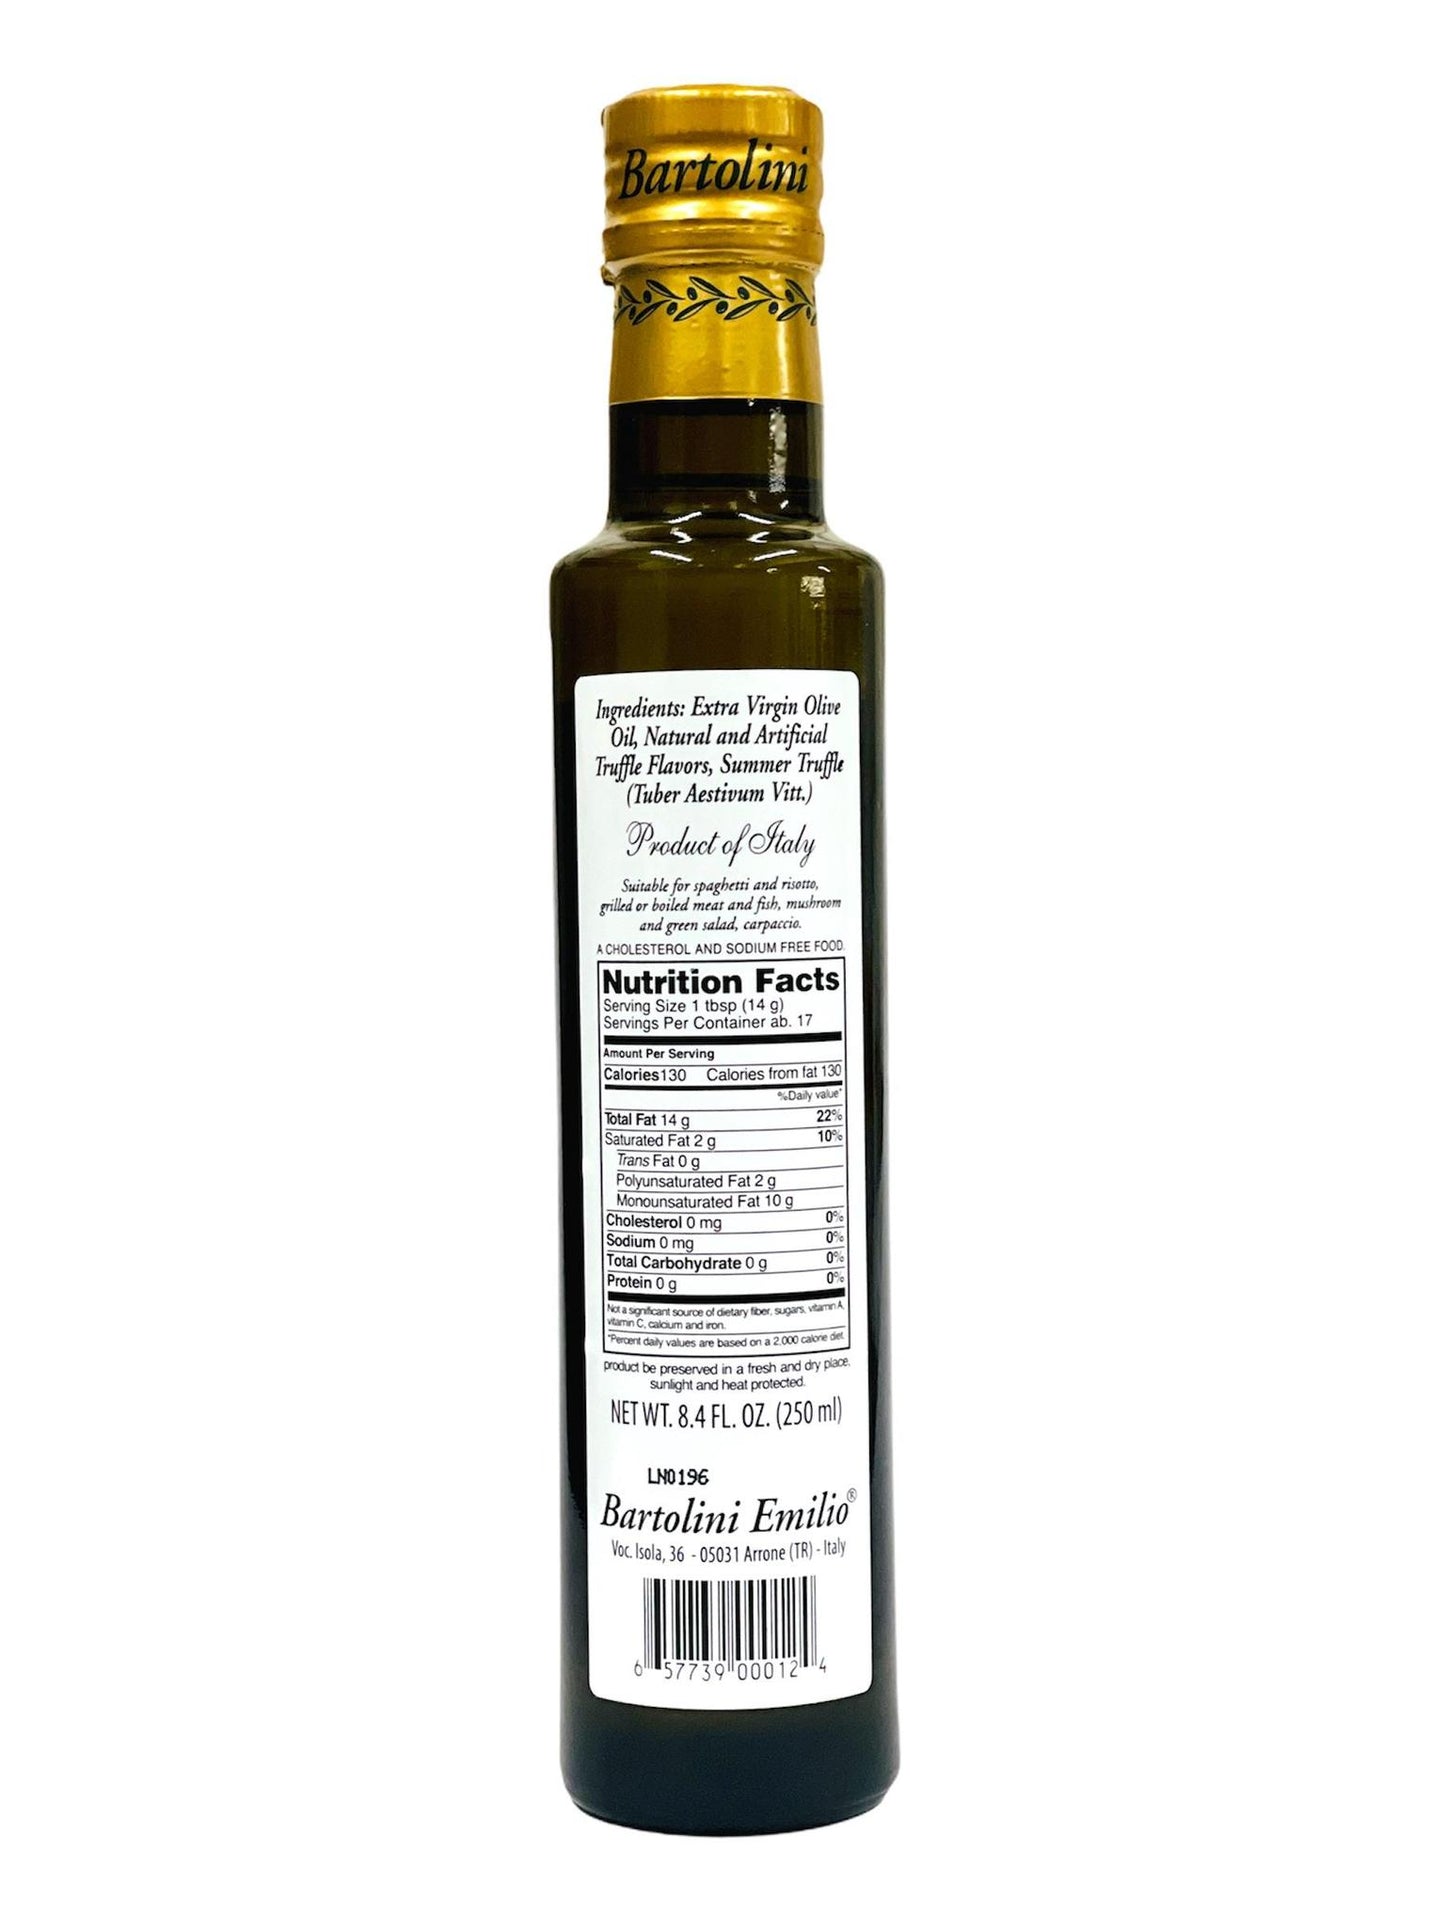 Bartolini Natural Flavored Black Truffle Oil, 8.4 fl oz